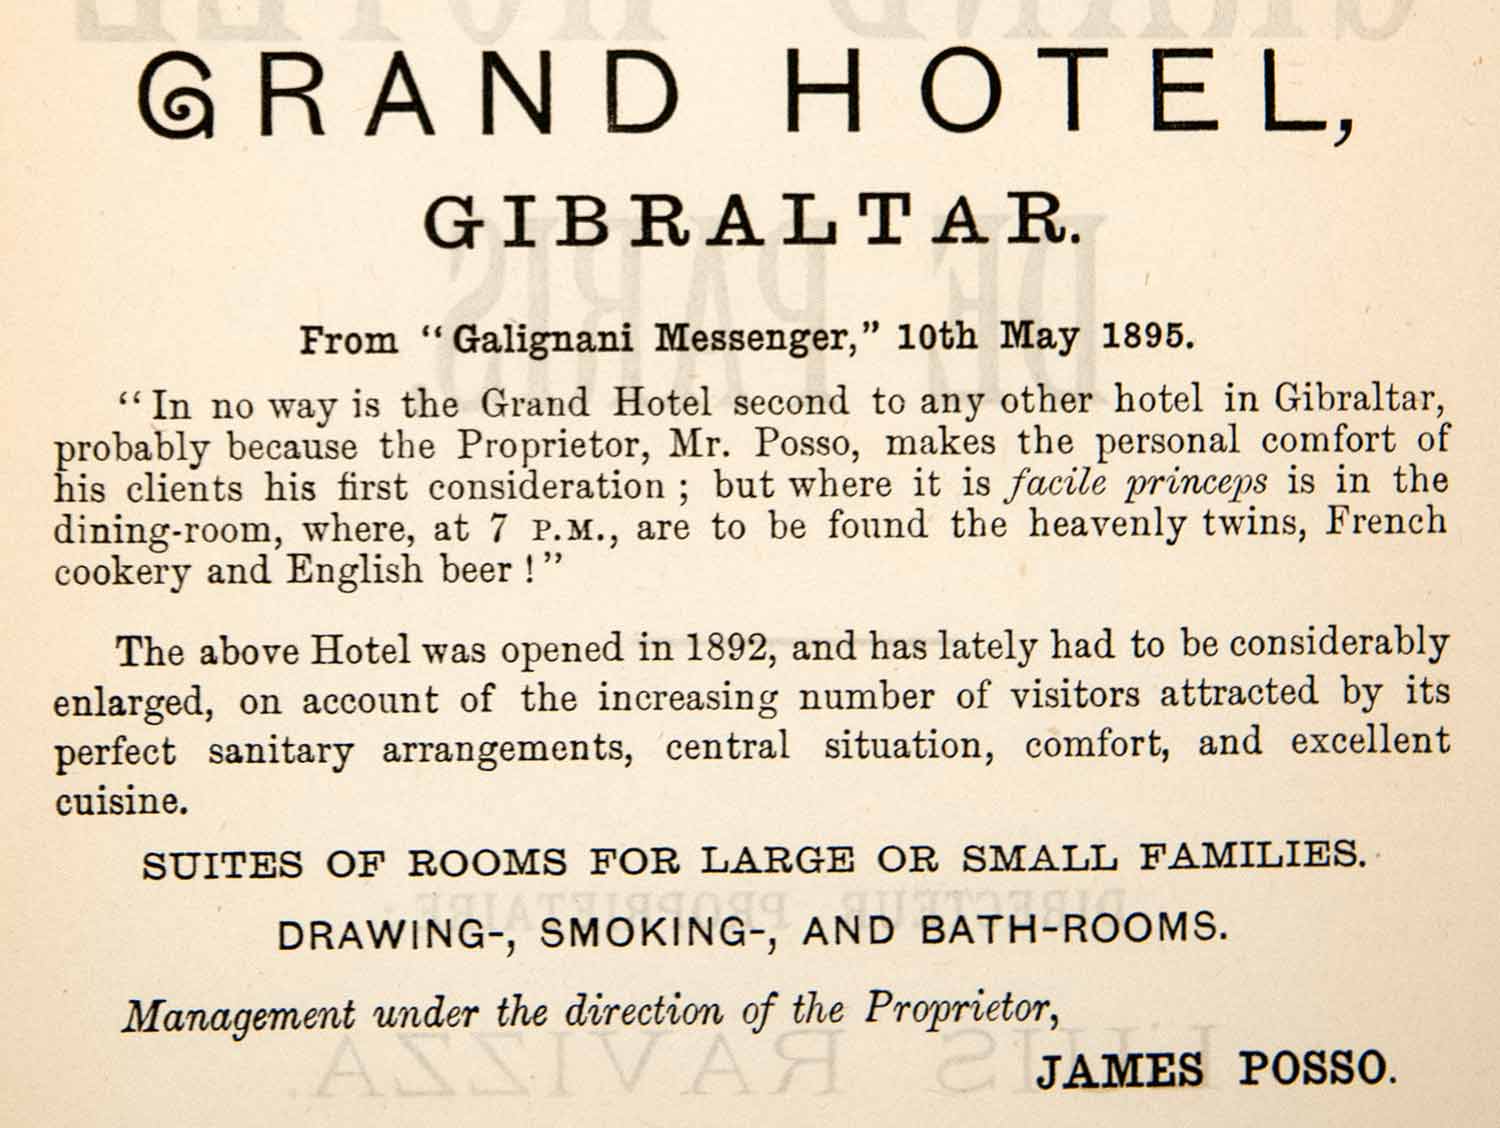 1895 Ad Grand Hotel Gibraltar Galignani Messenger James Posso Resort Spain XGGB5